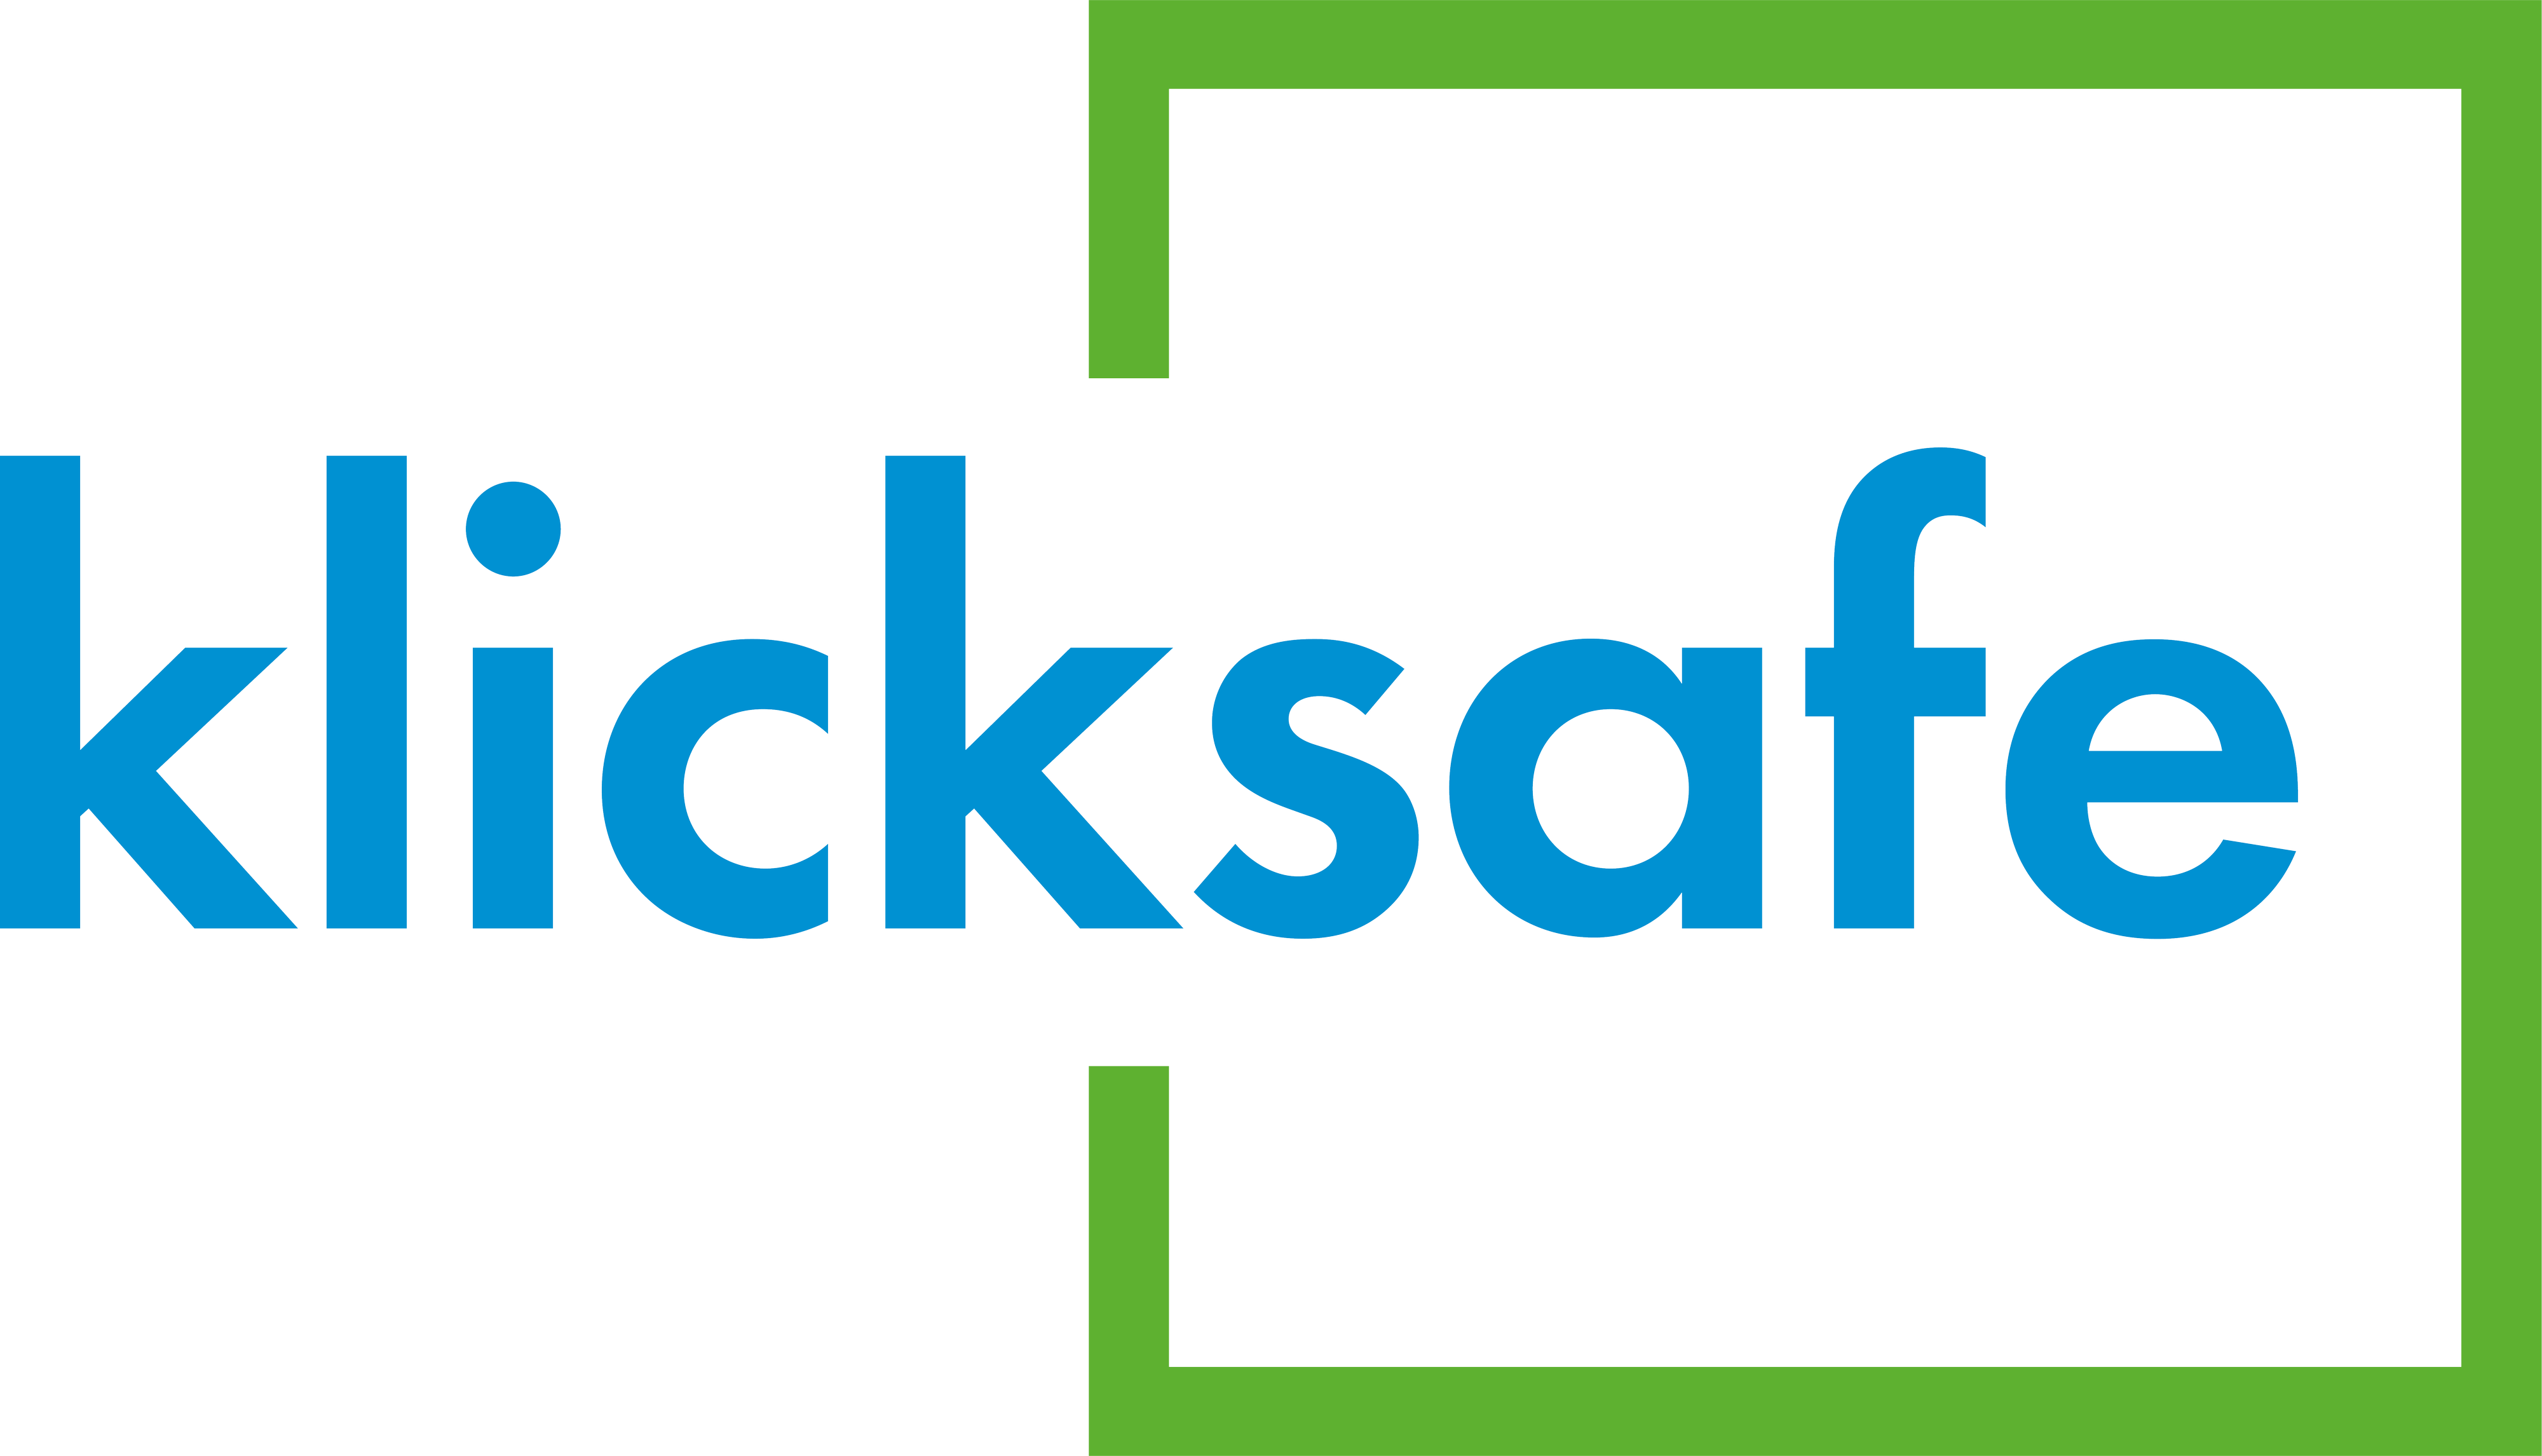 Logo der Initiative "klicksafe"